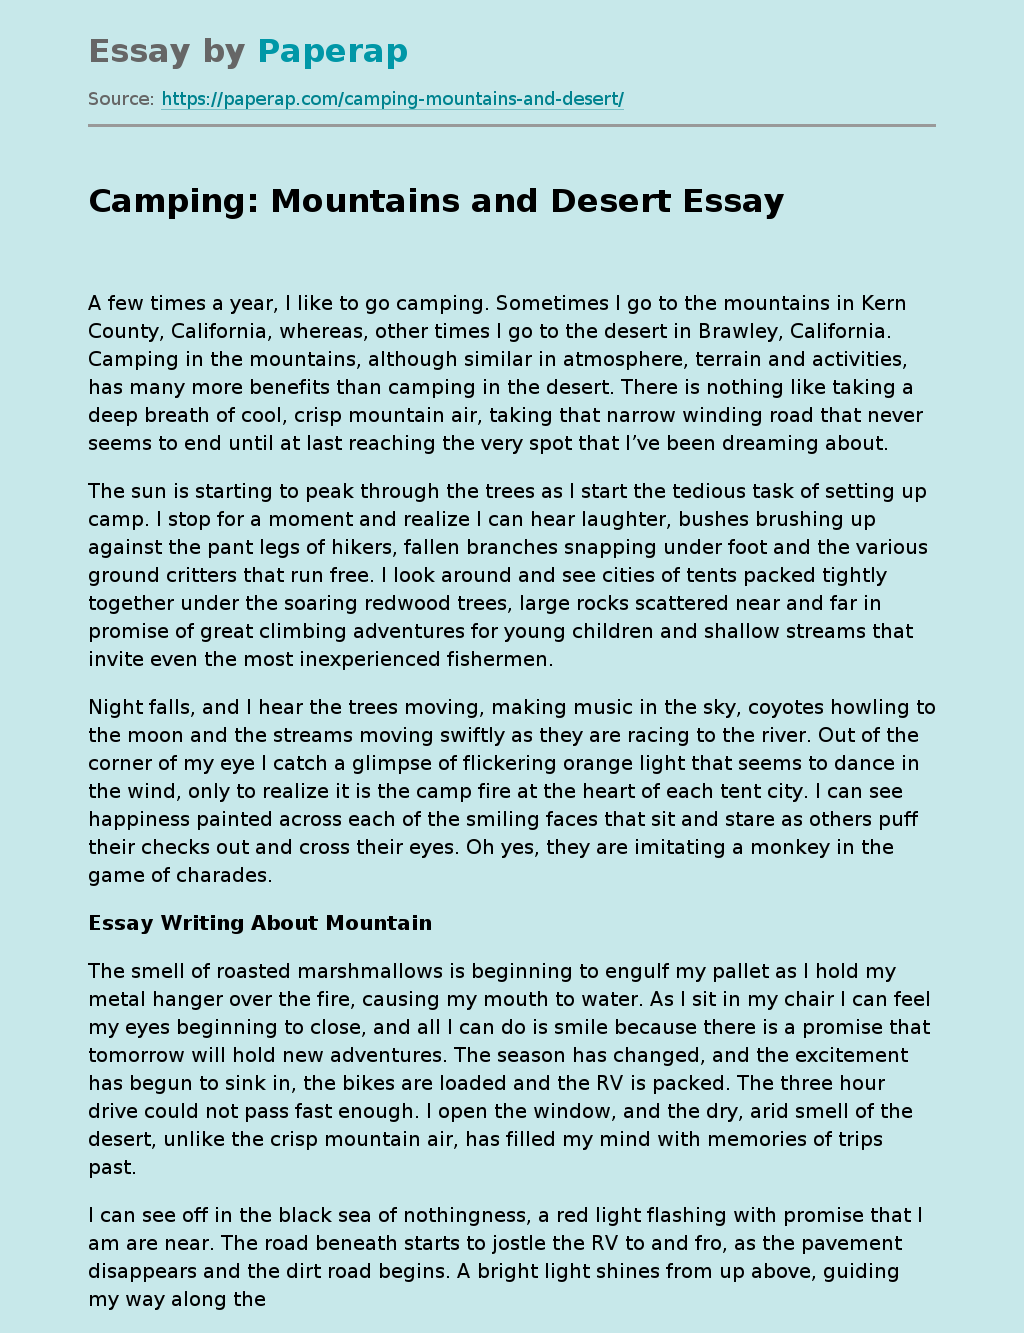 short essay on camping trip